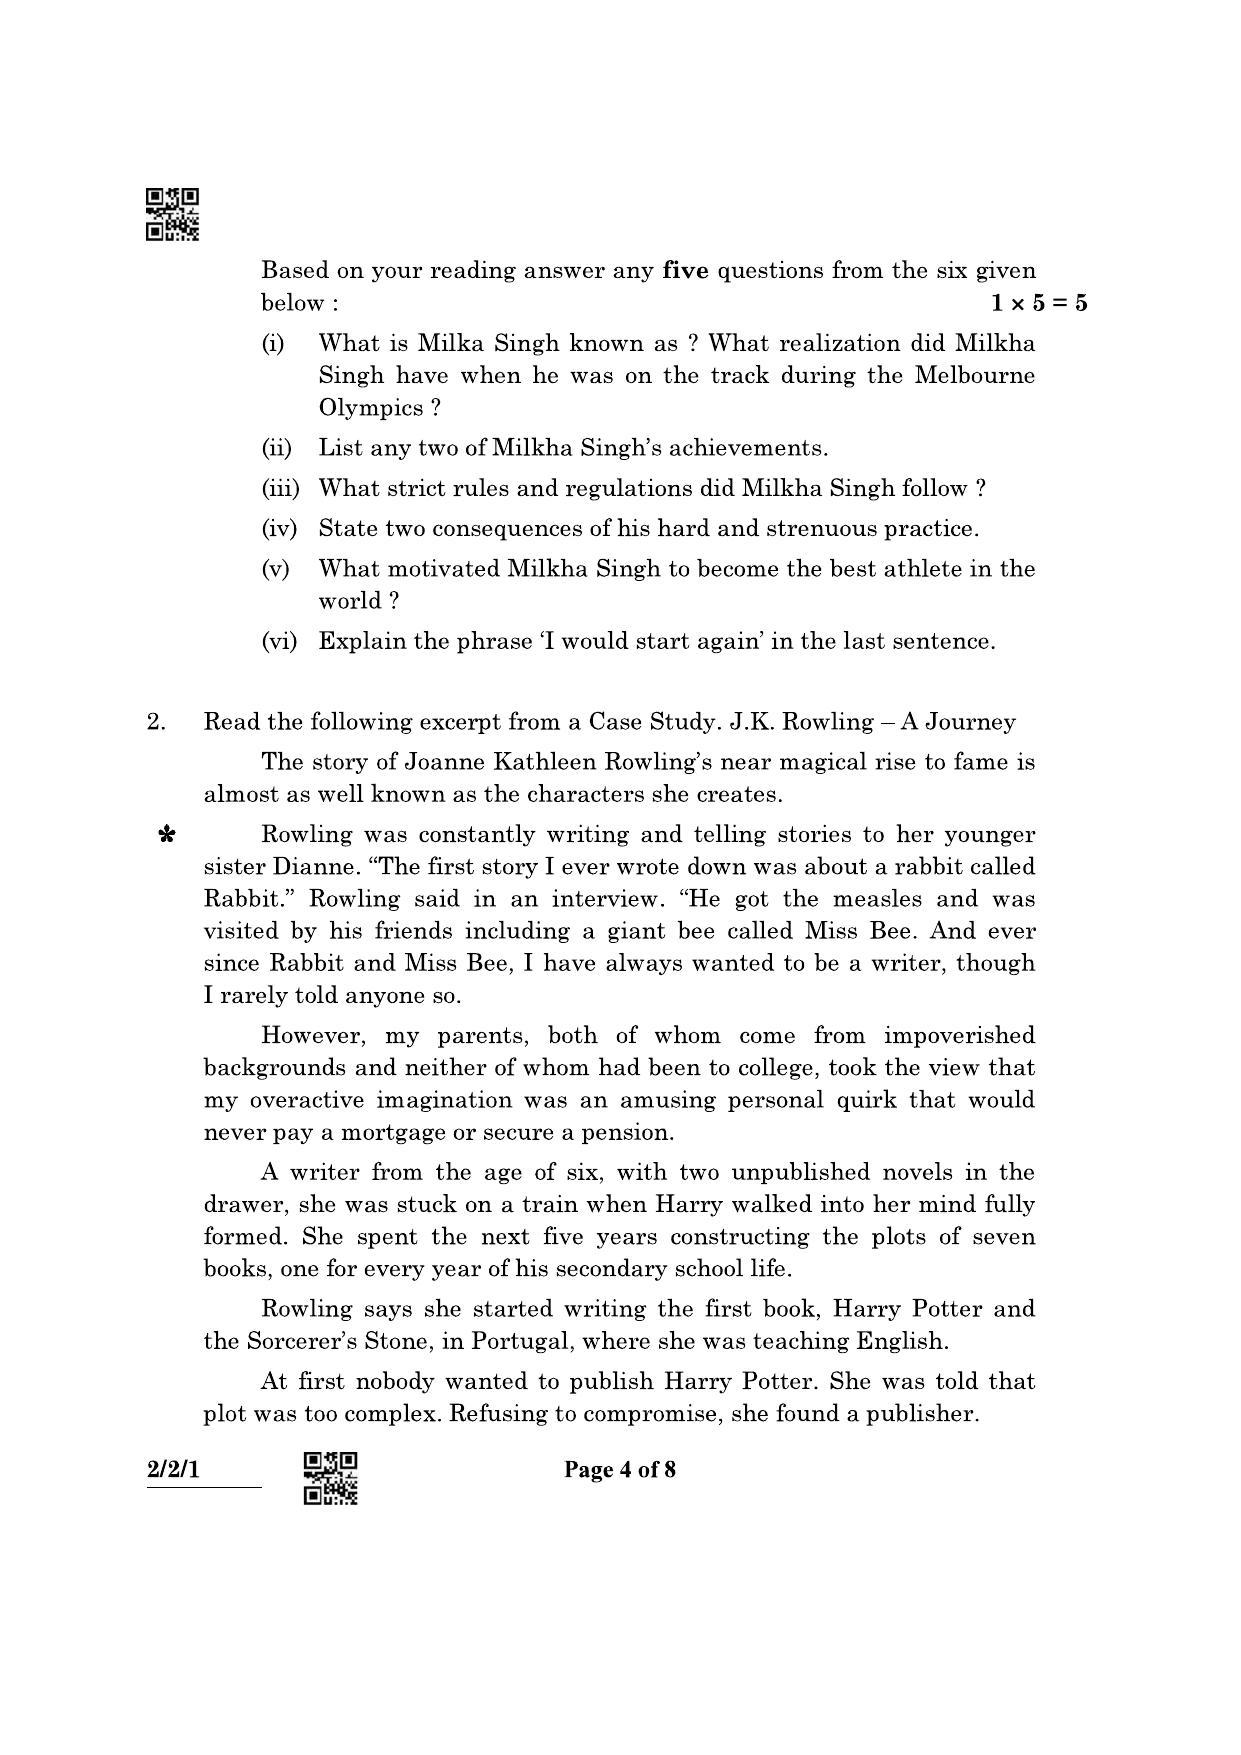 CBSE Class 10 2-2-1 (English L & L) 2022 Question Paper - Page 4